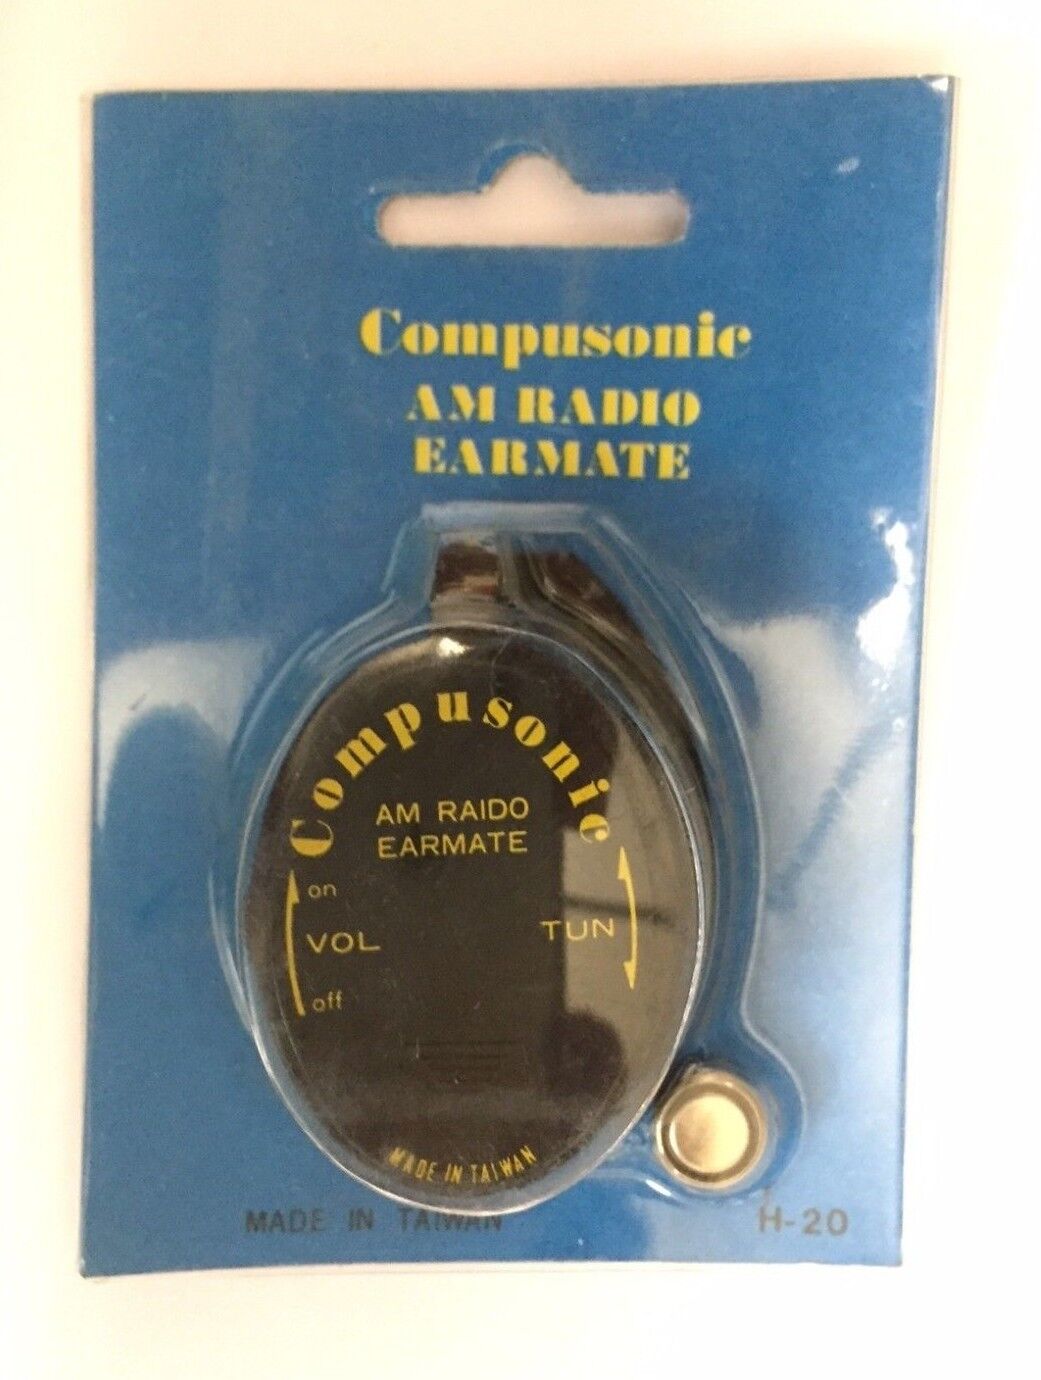 EAR PHONE AM RADIO EARMATE EARPIECE TRANSISTOR RADIO COMPUSONIC